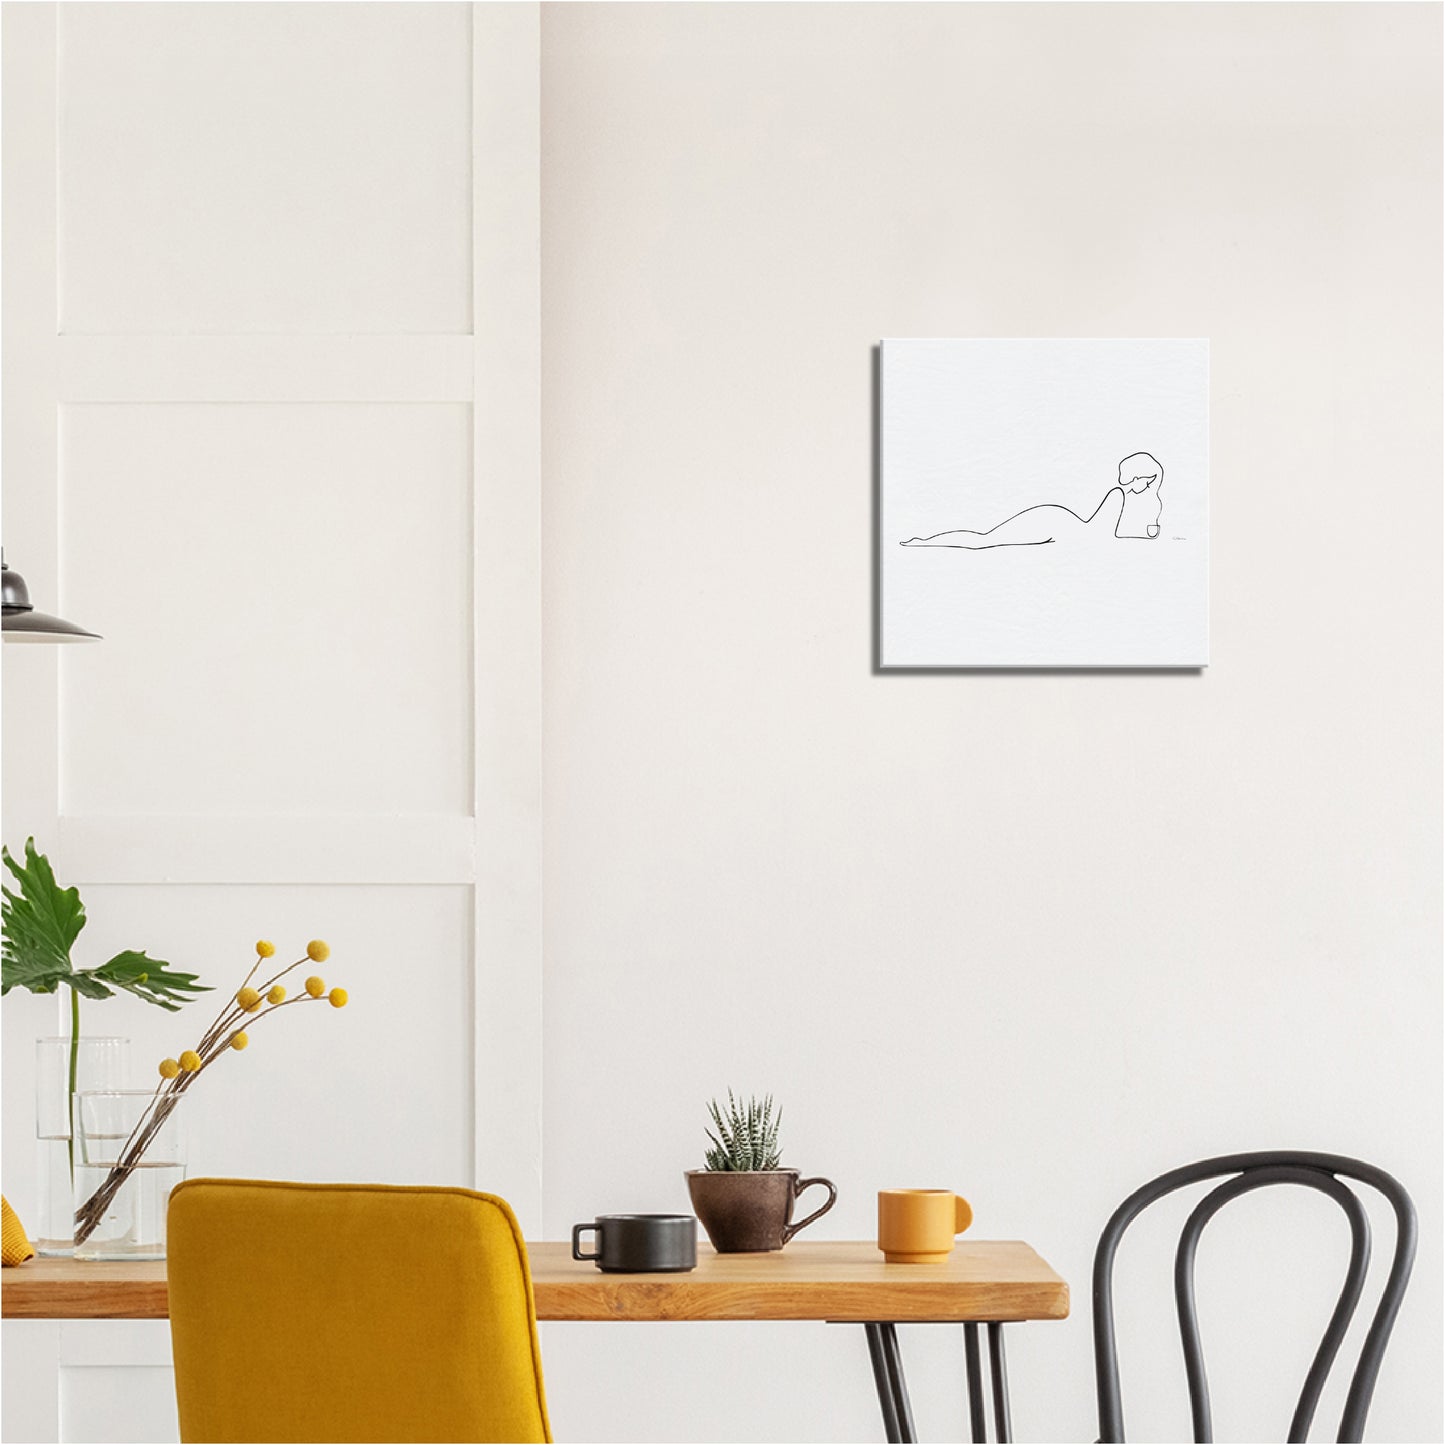 Kaffee oder Tee? Nr. 1-JUDITH CLARA-40x40 cm Leinwand-one-line-art